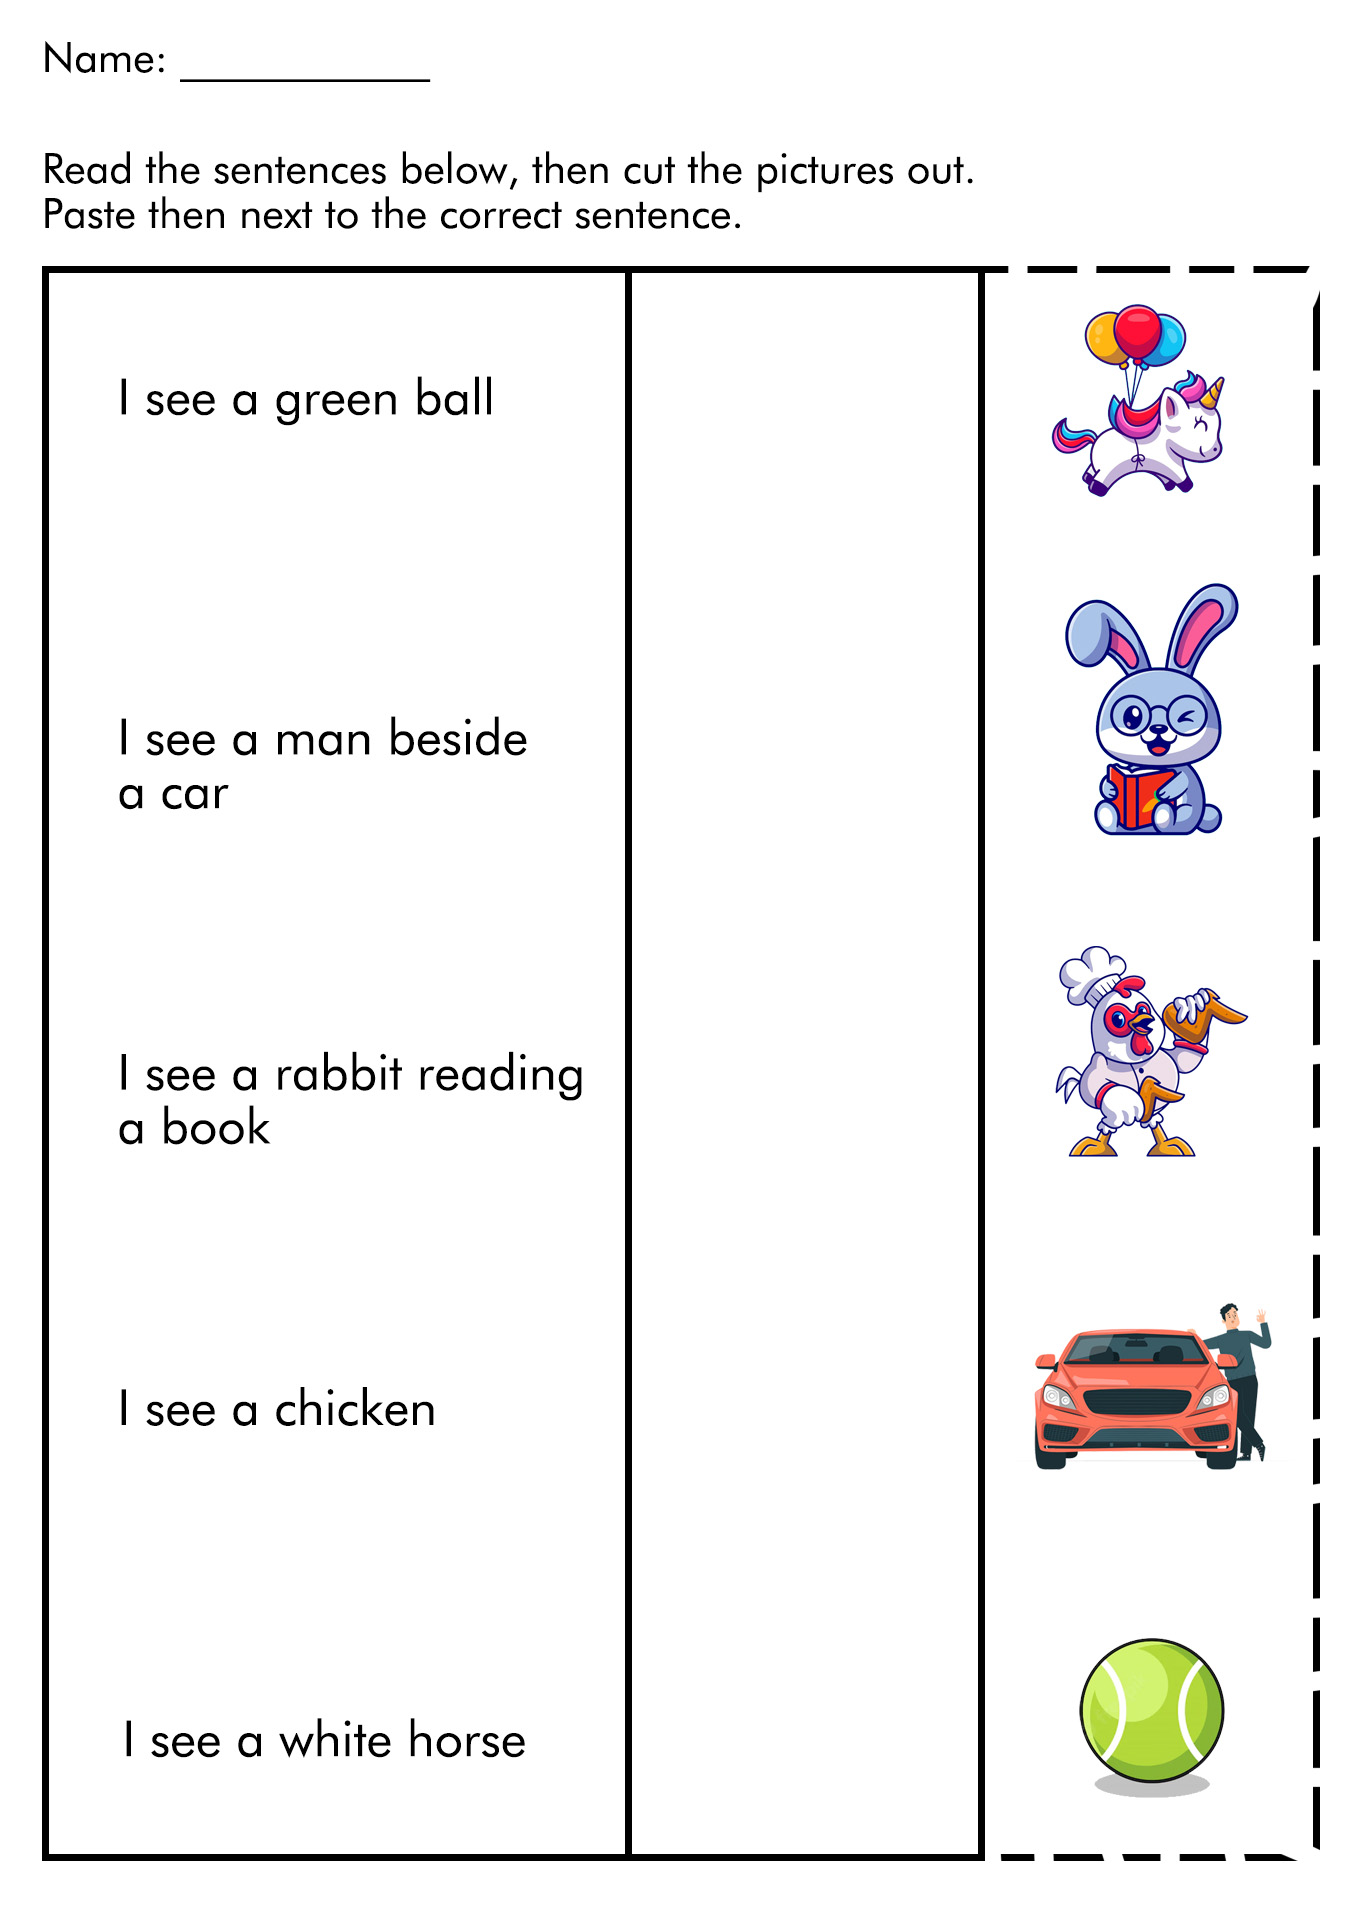 Edmark Reading Program Level 1 Worksheets Image